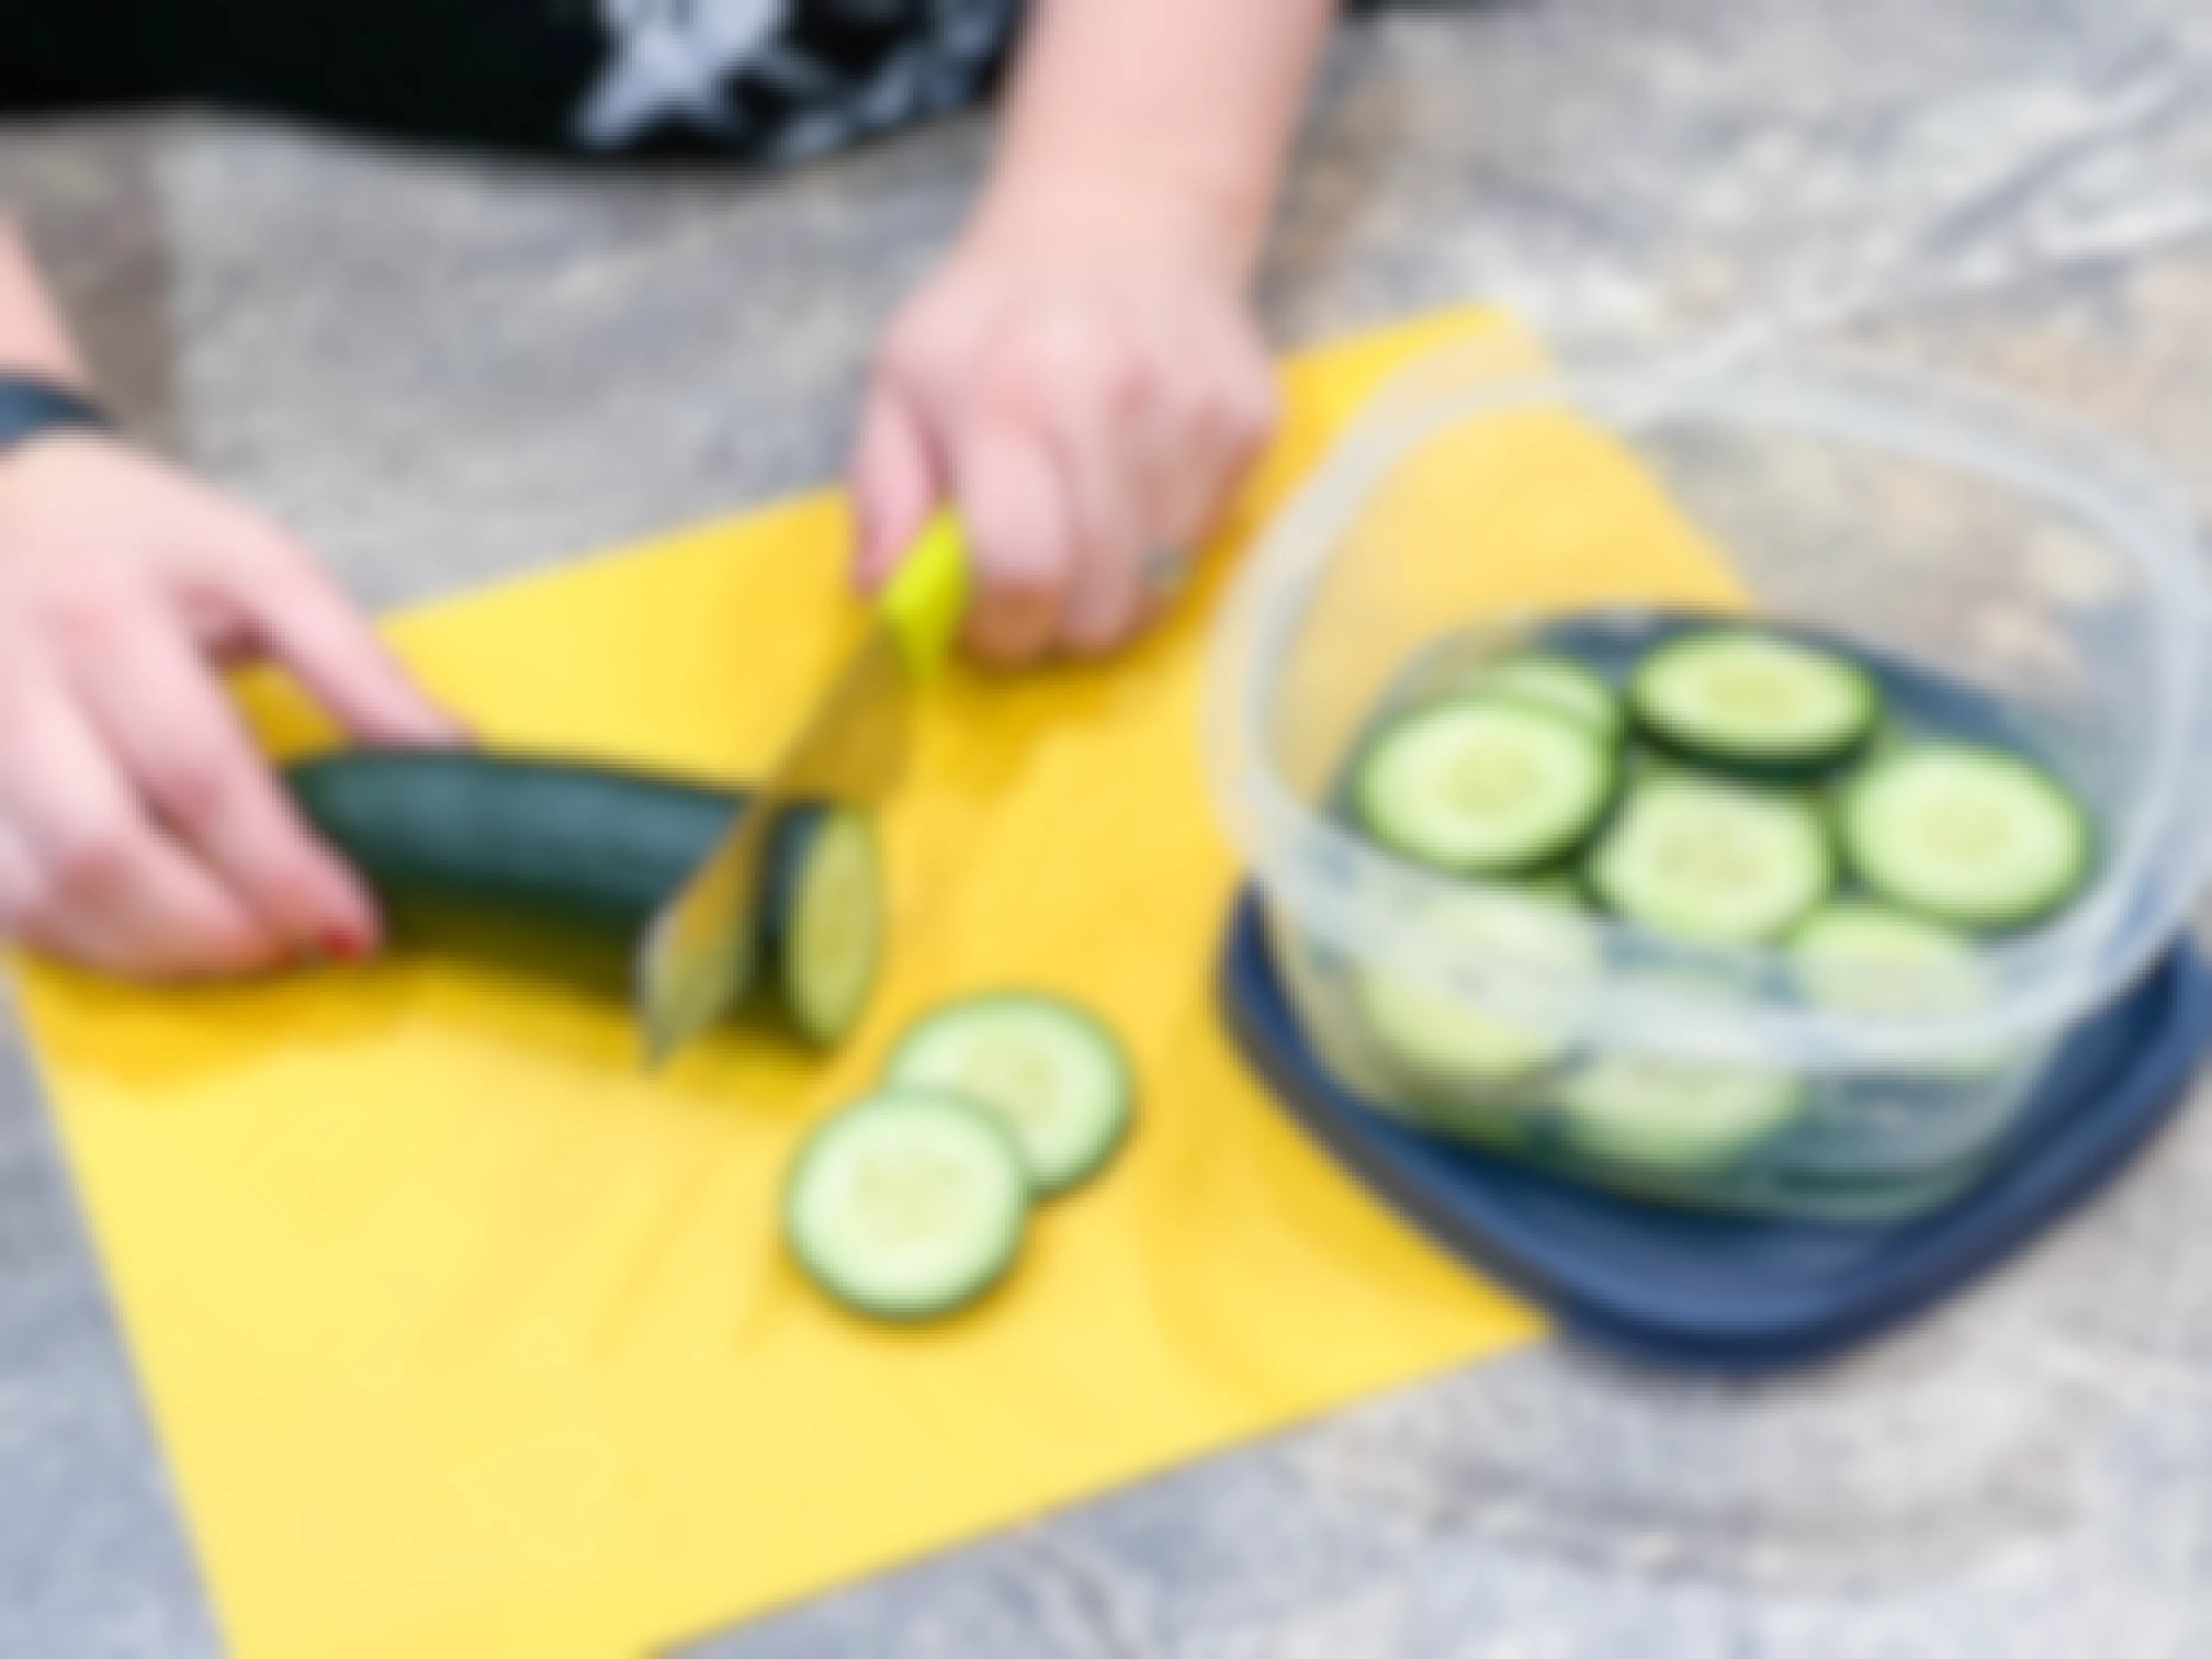 cucumber being sliced